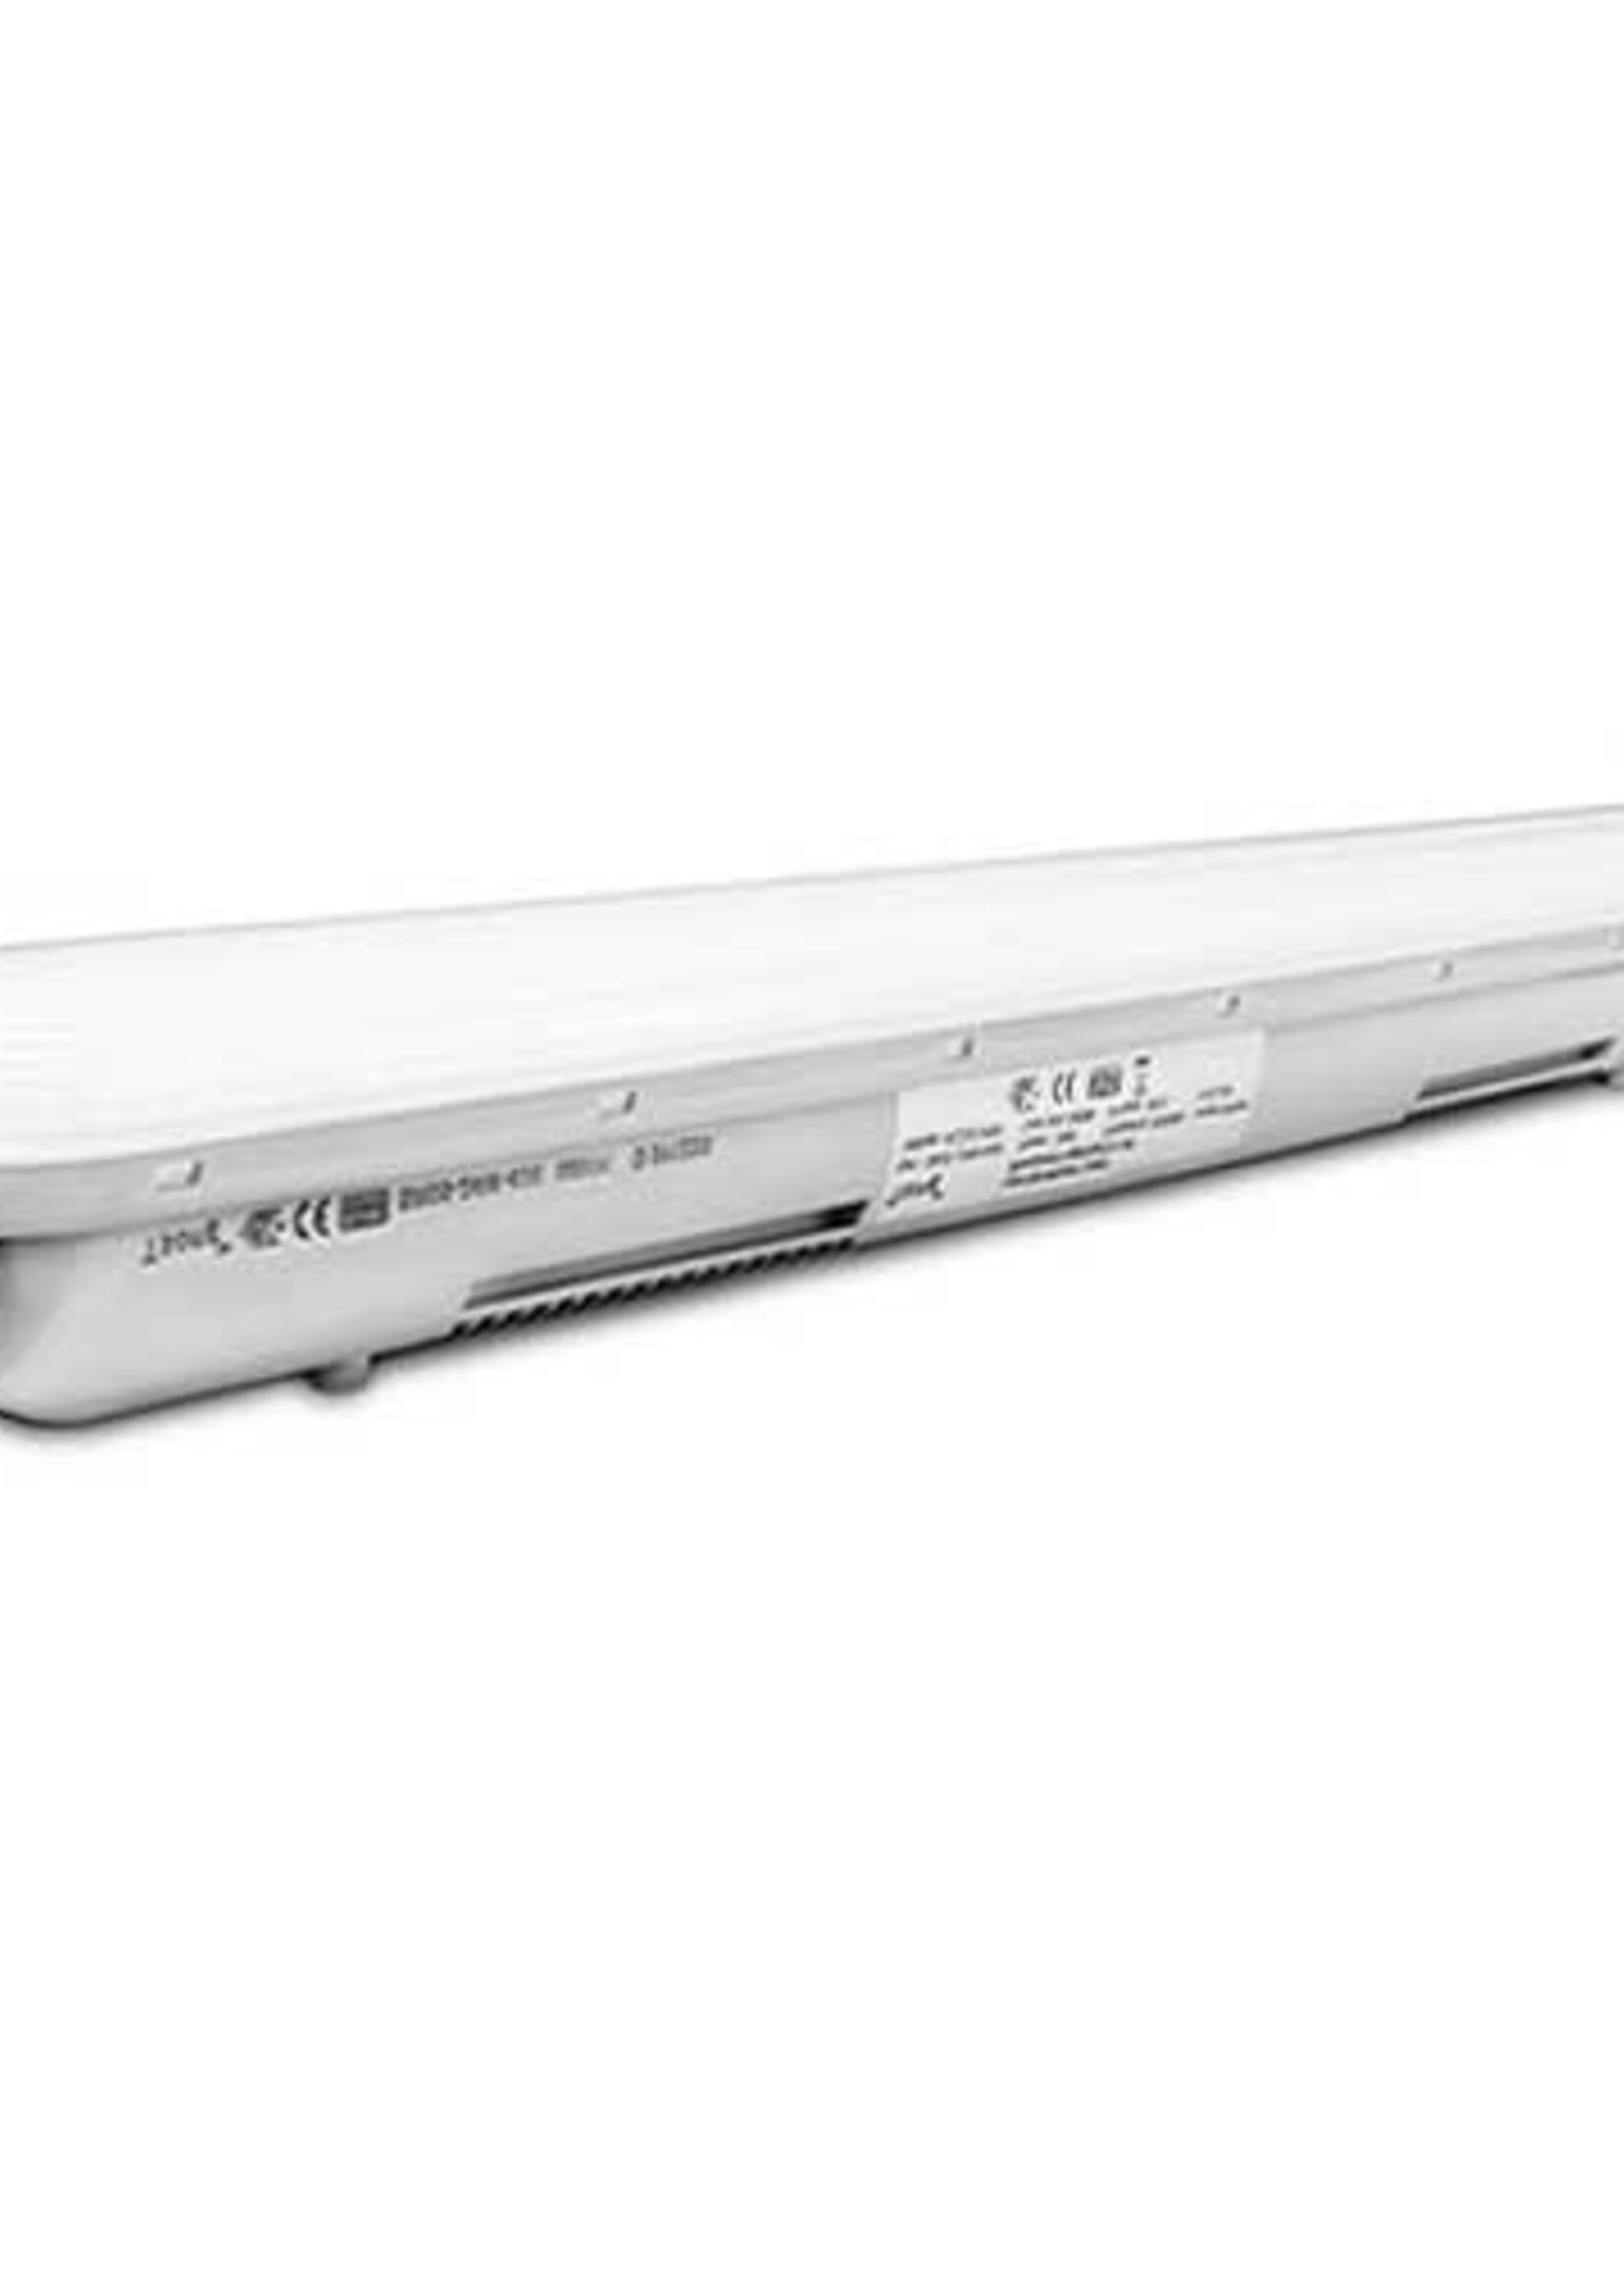 LEDWINKEL-Online LED Tri-Proof Light IP65 Water resistant 120cm 36W